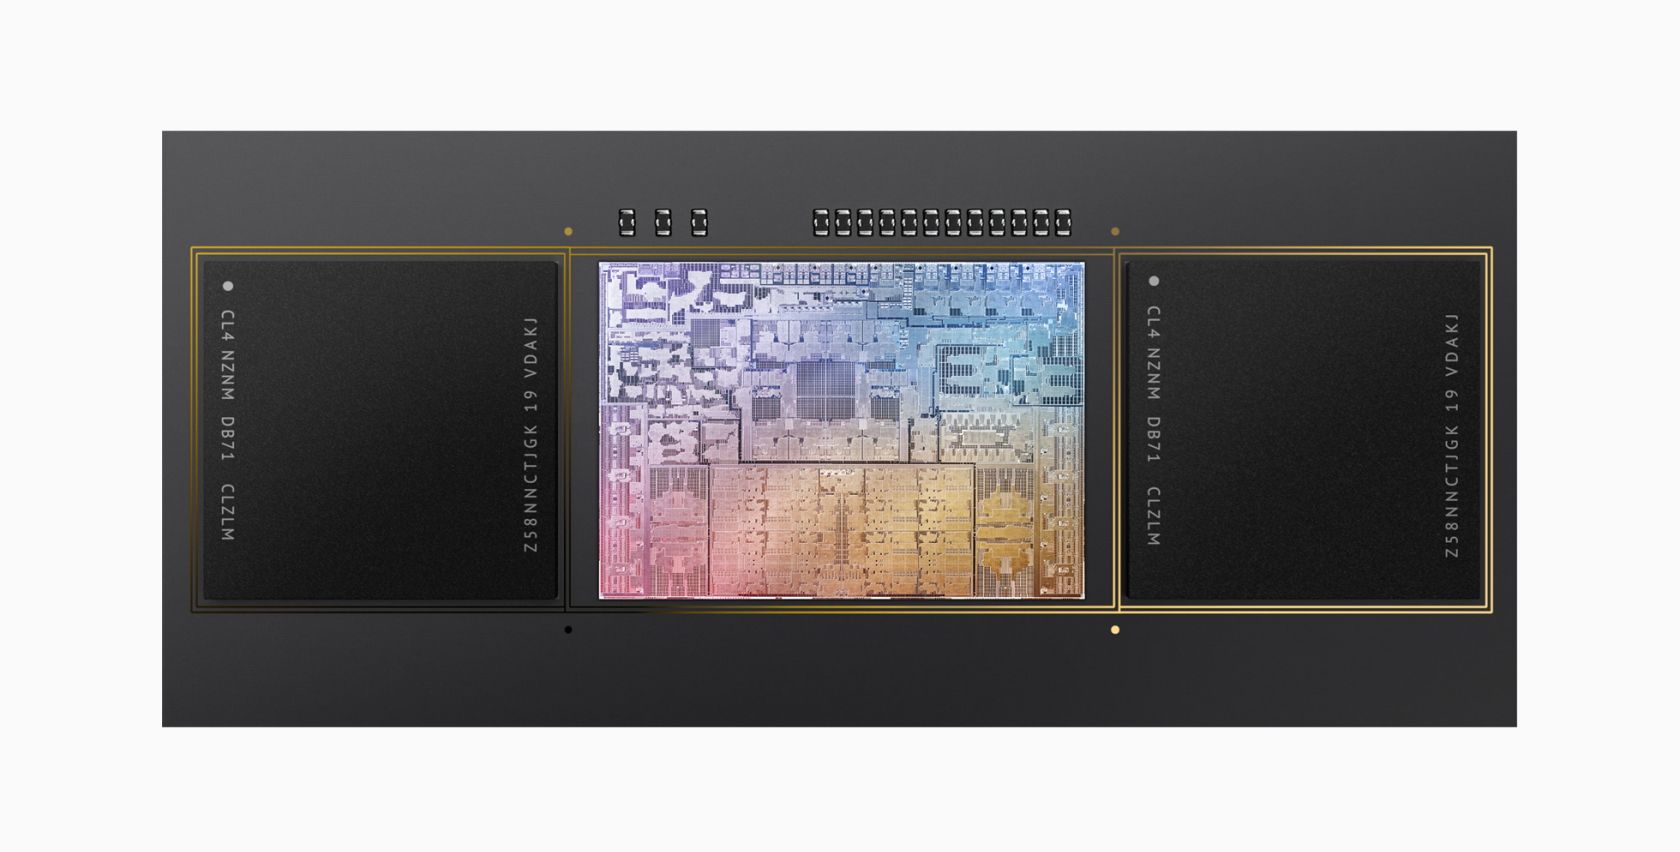 Apple M1 Pro chip official image